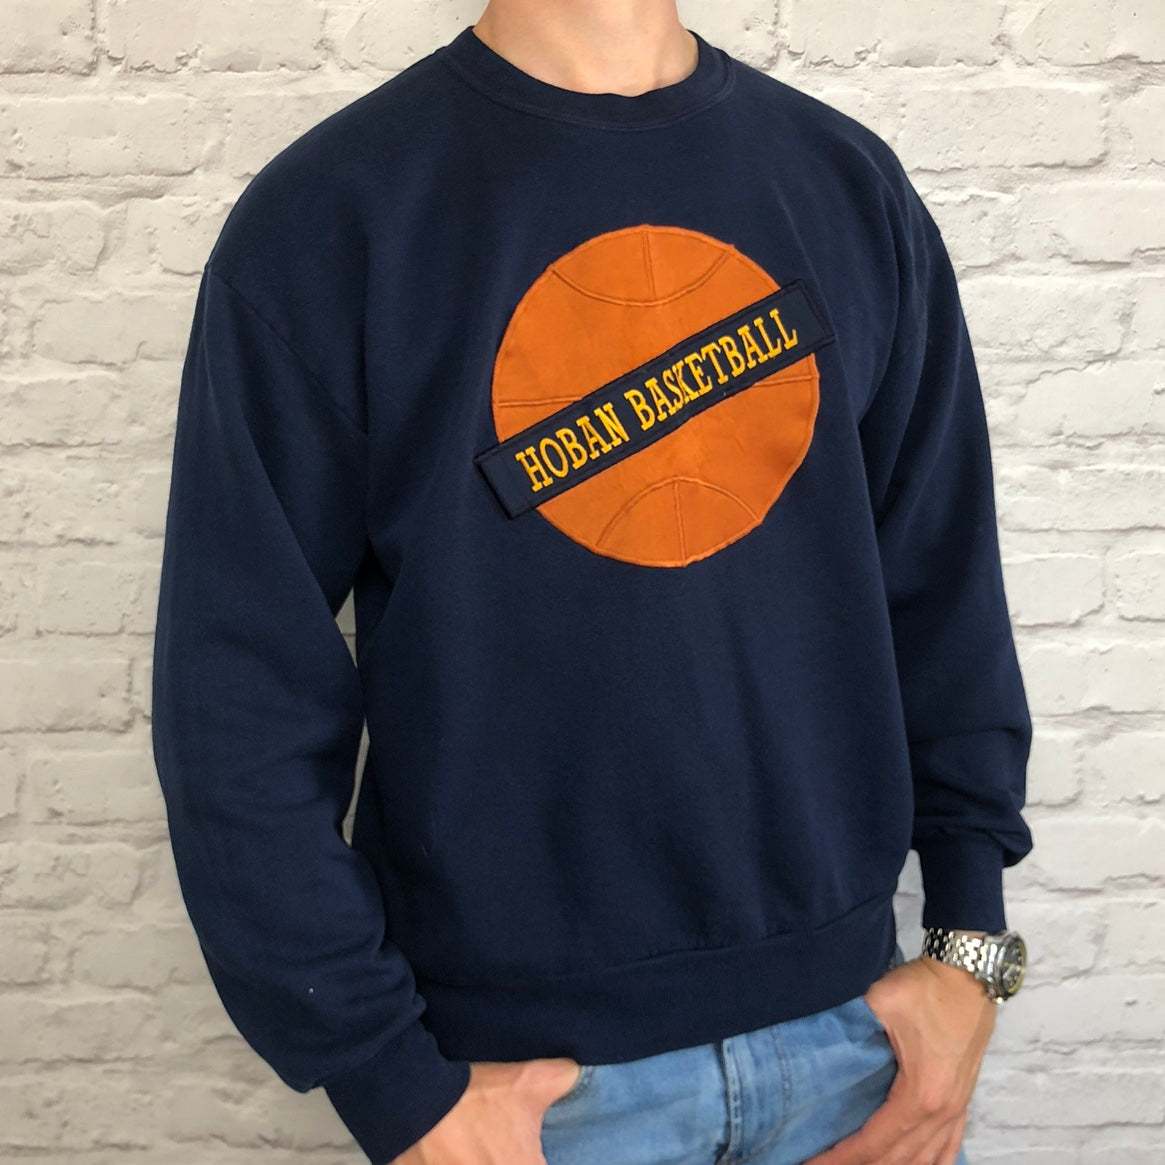 Unbranded Men's Vintage Basketball Sweatshirt - Large